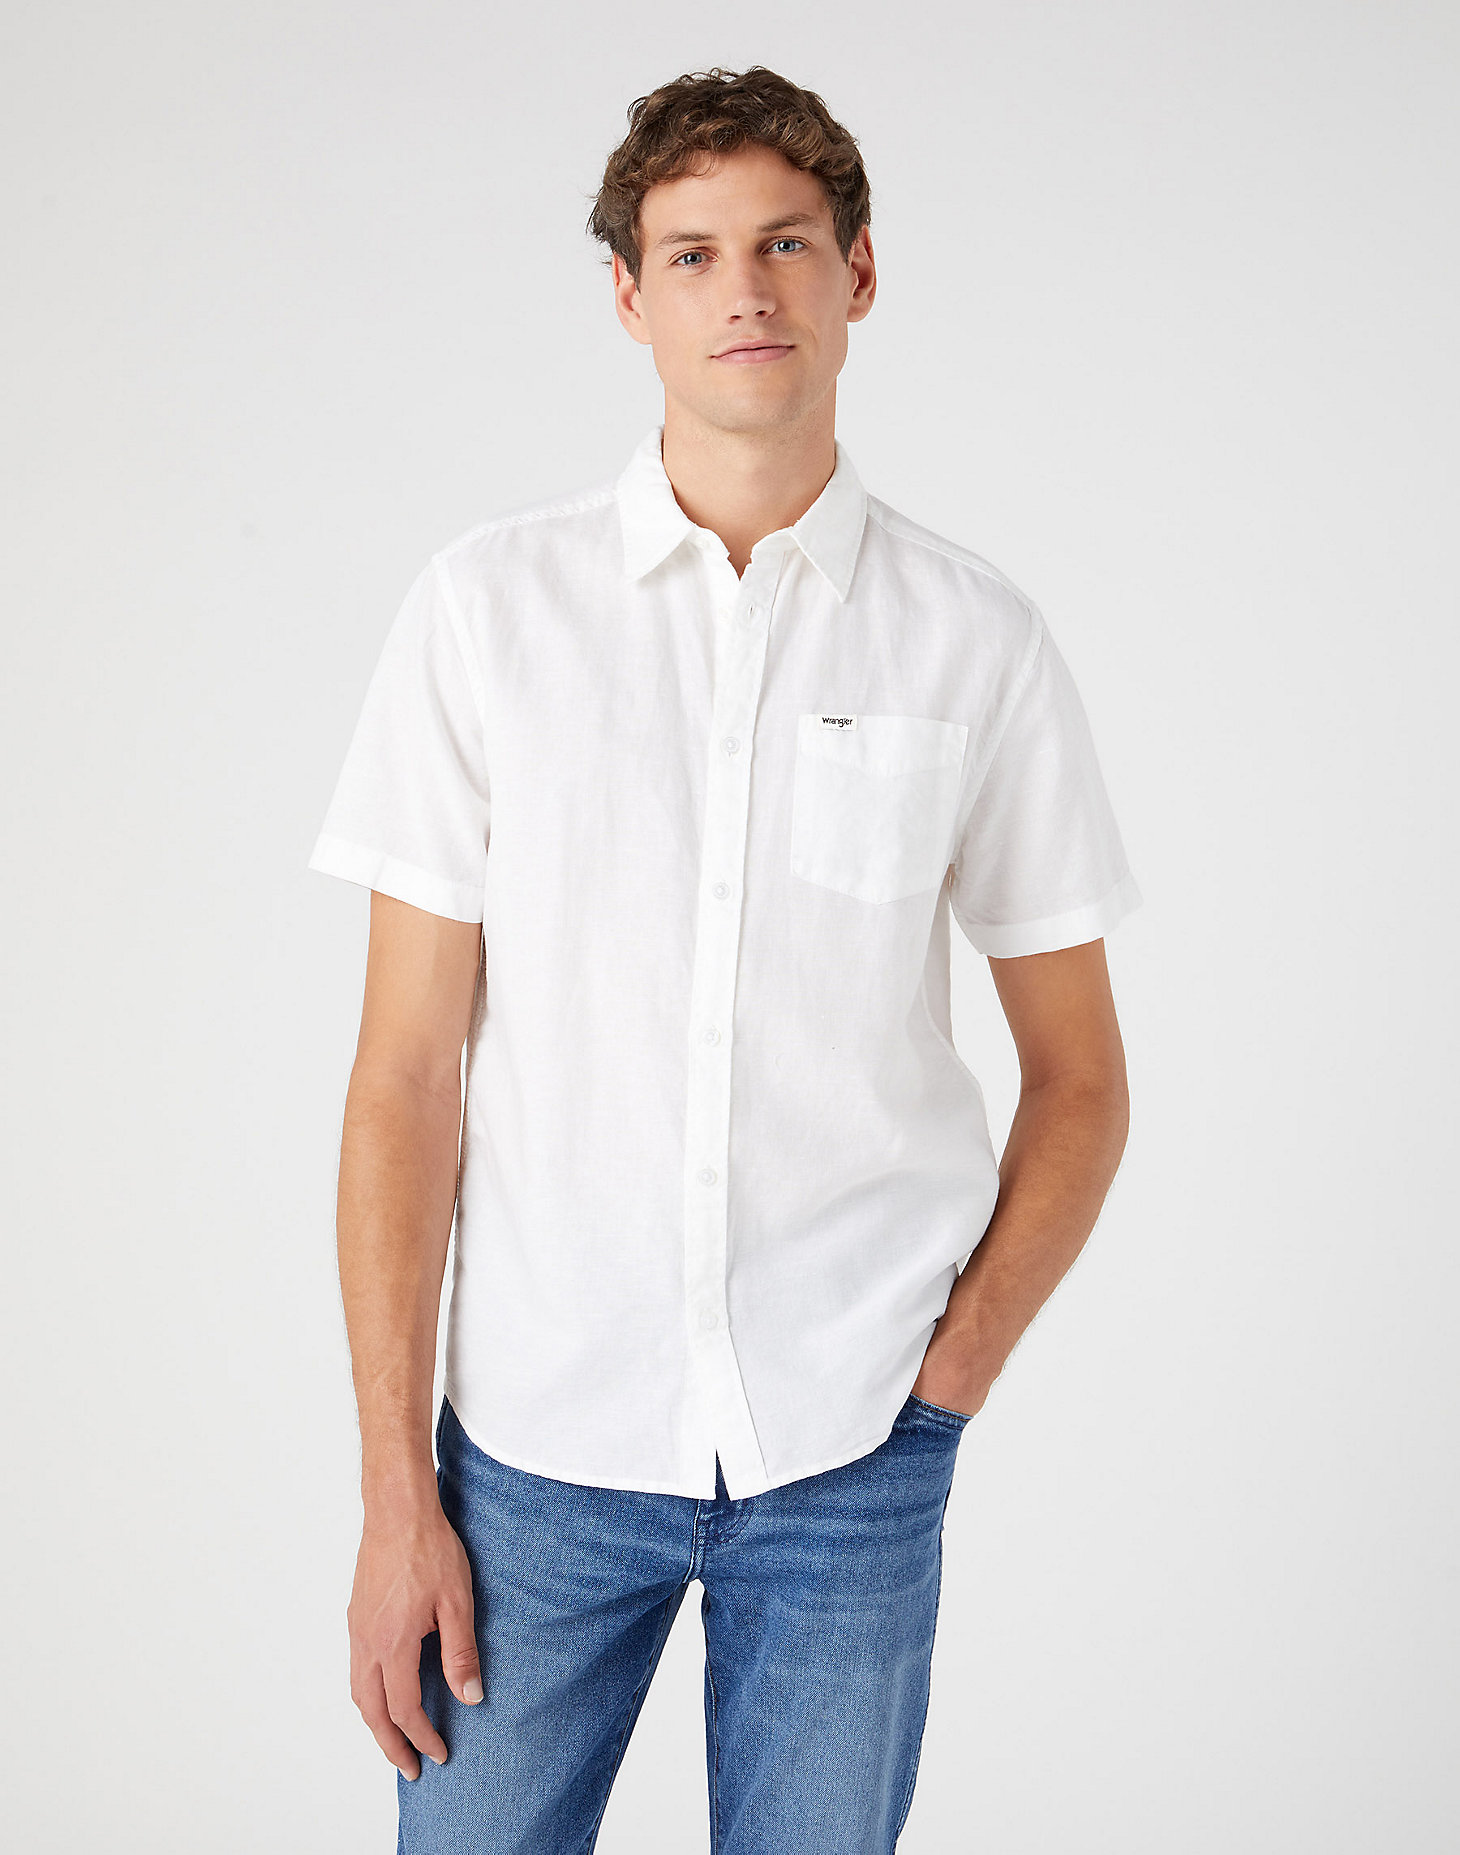 Short Sleeve 1 Pocket Shirt in White main view